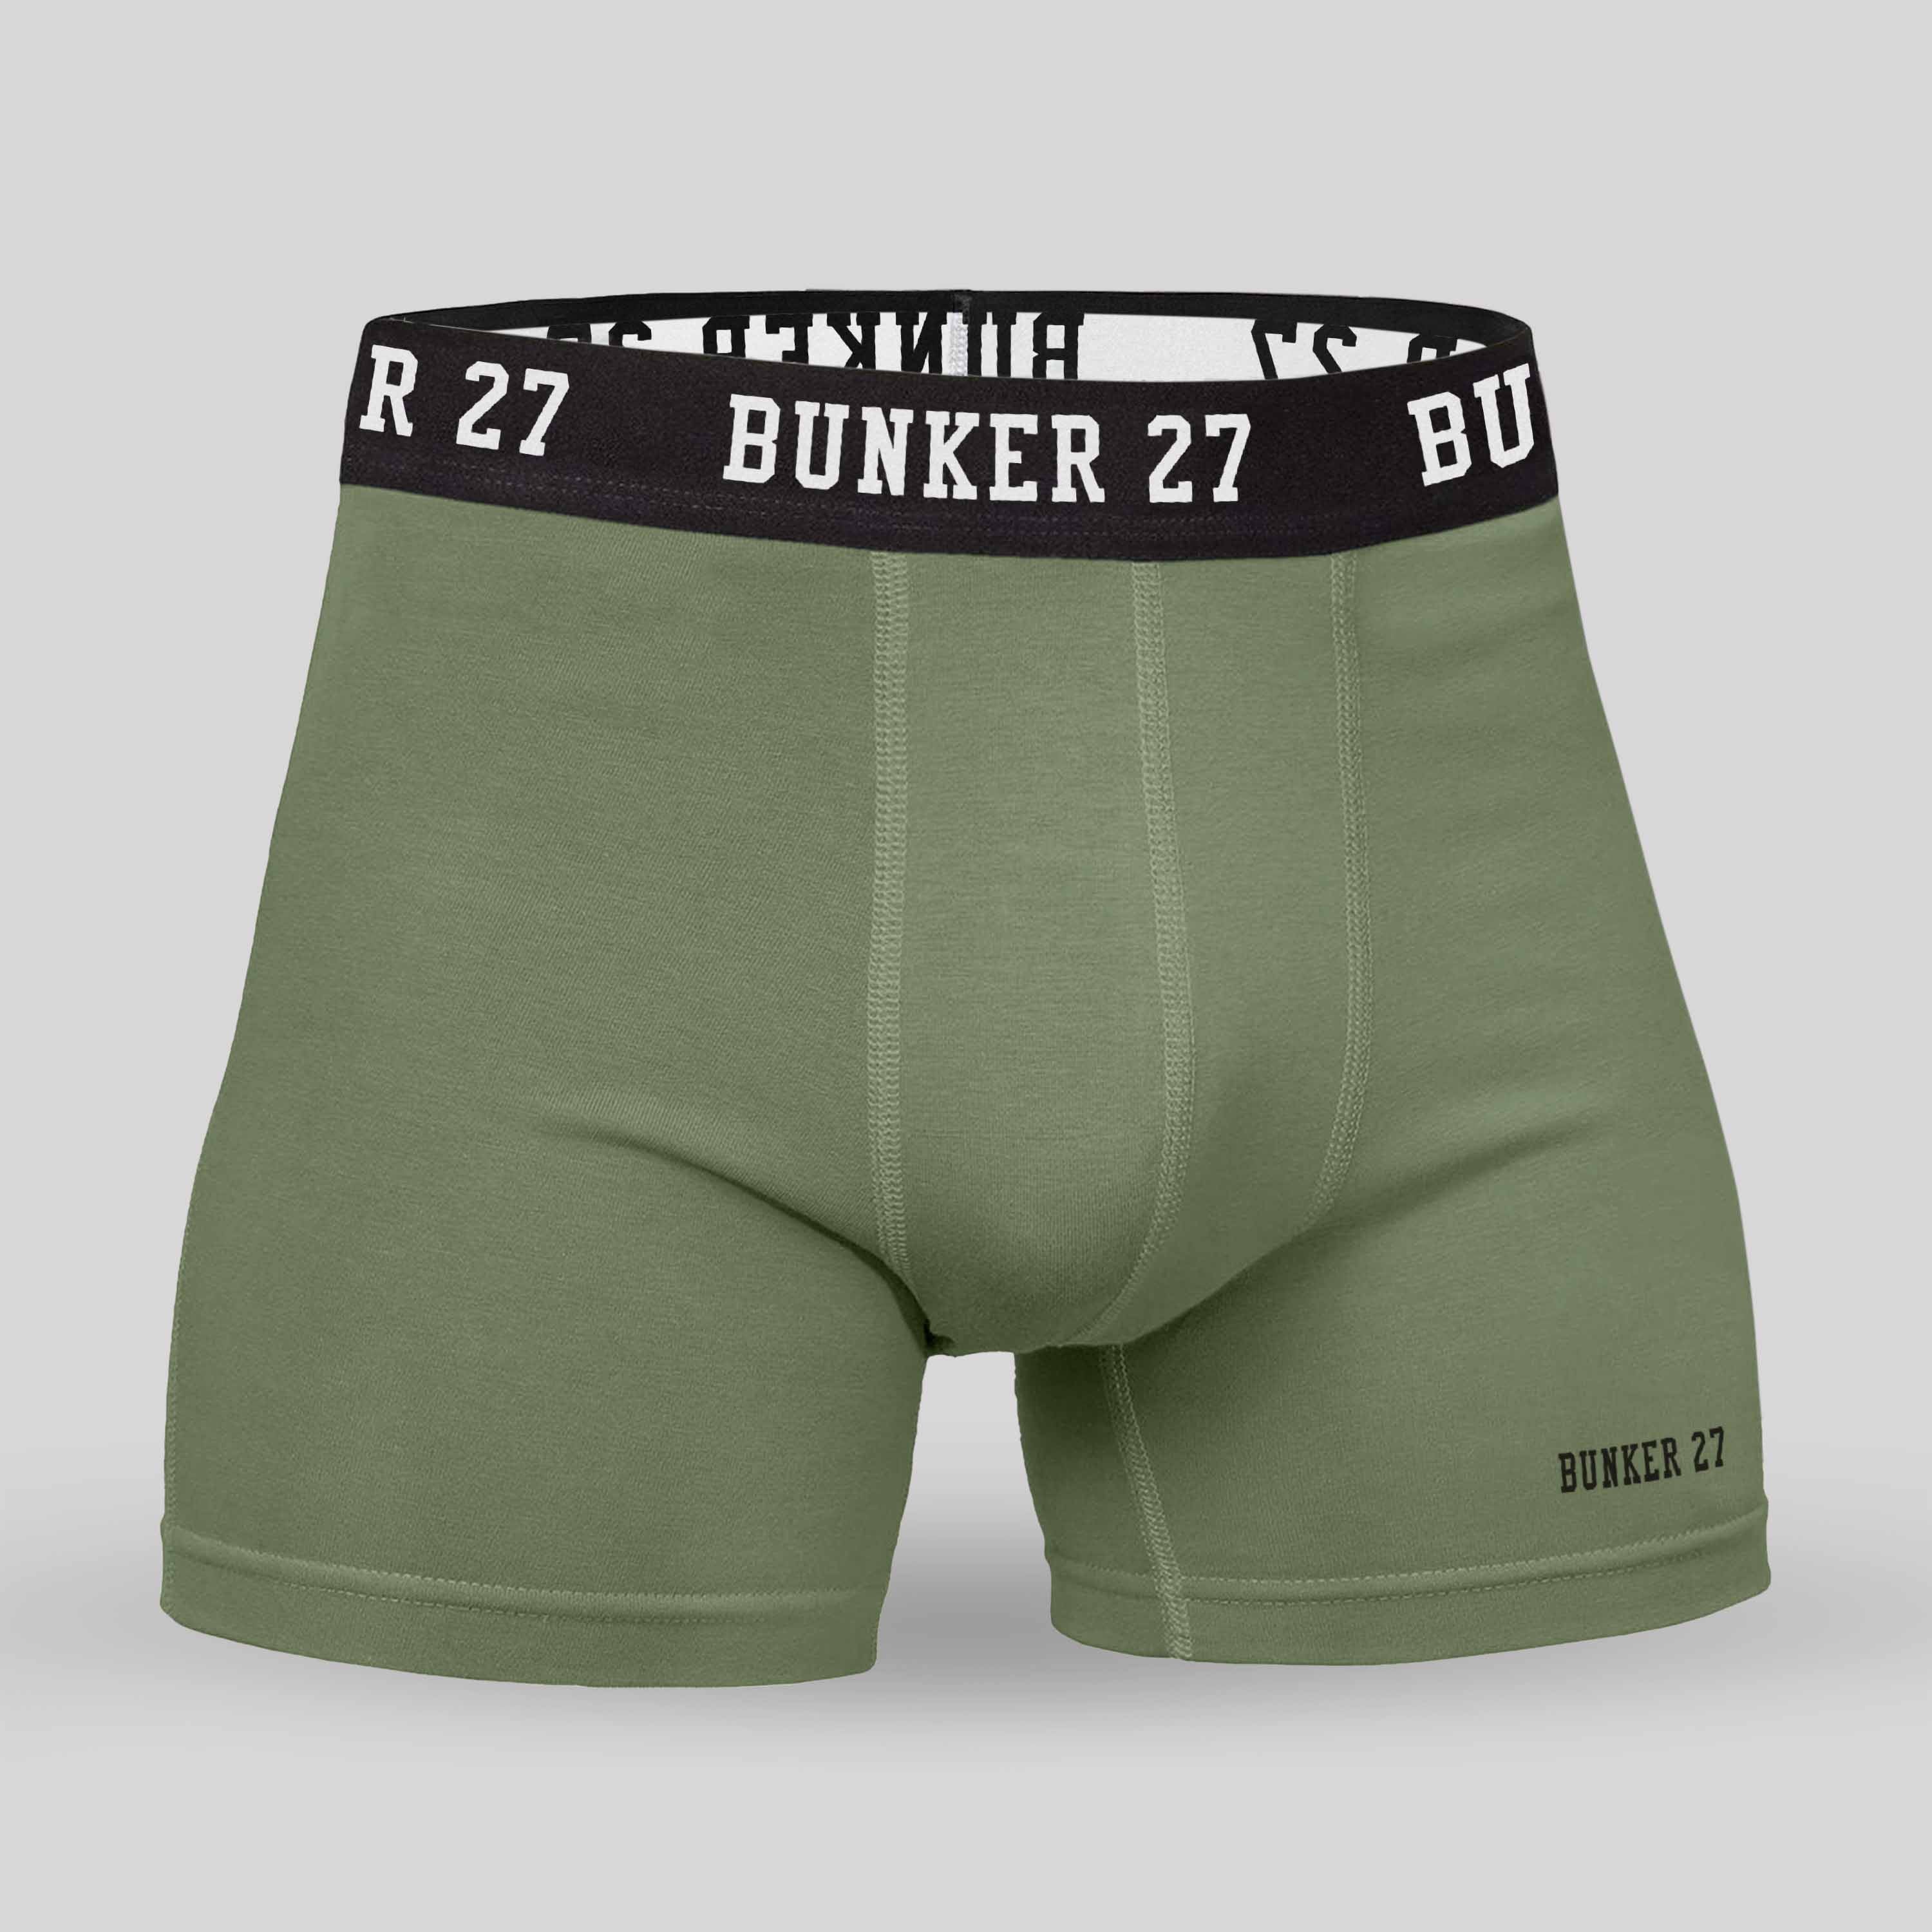 Mens 3 Pack Boxer Brief Underwear - BUNKER 27